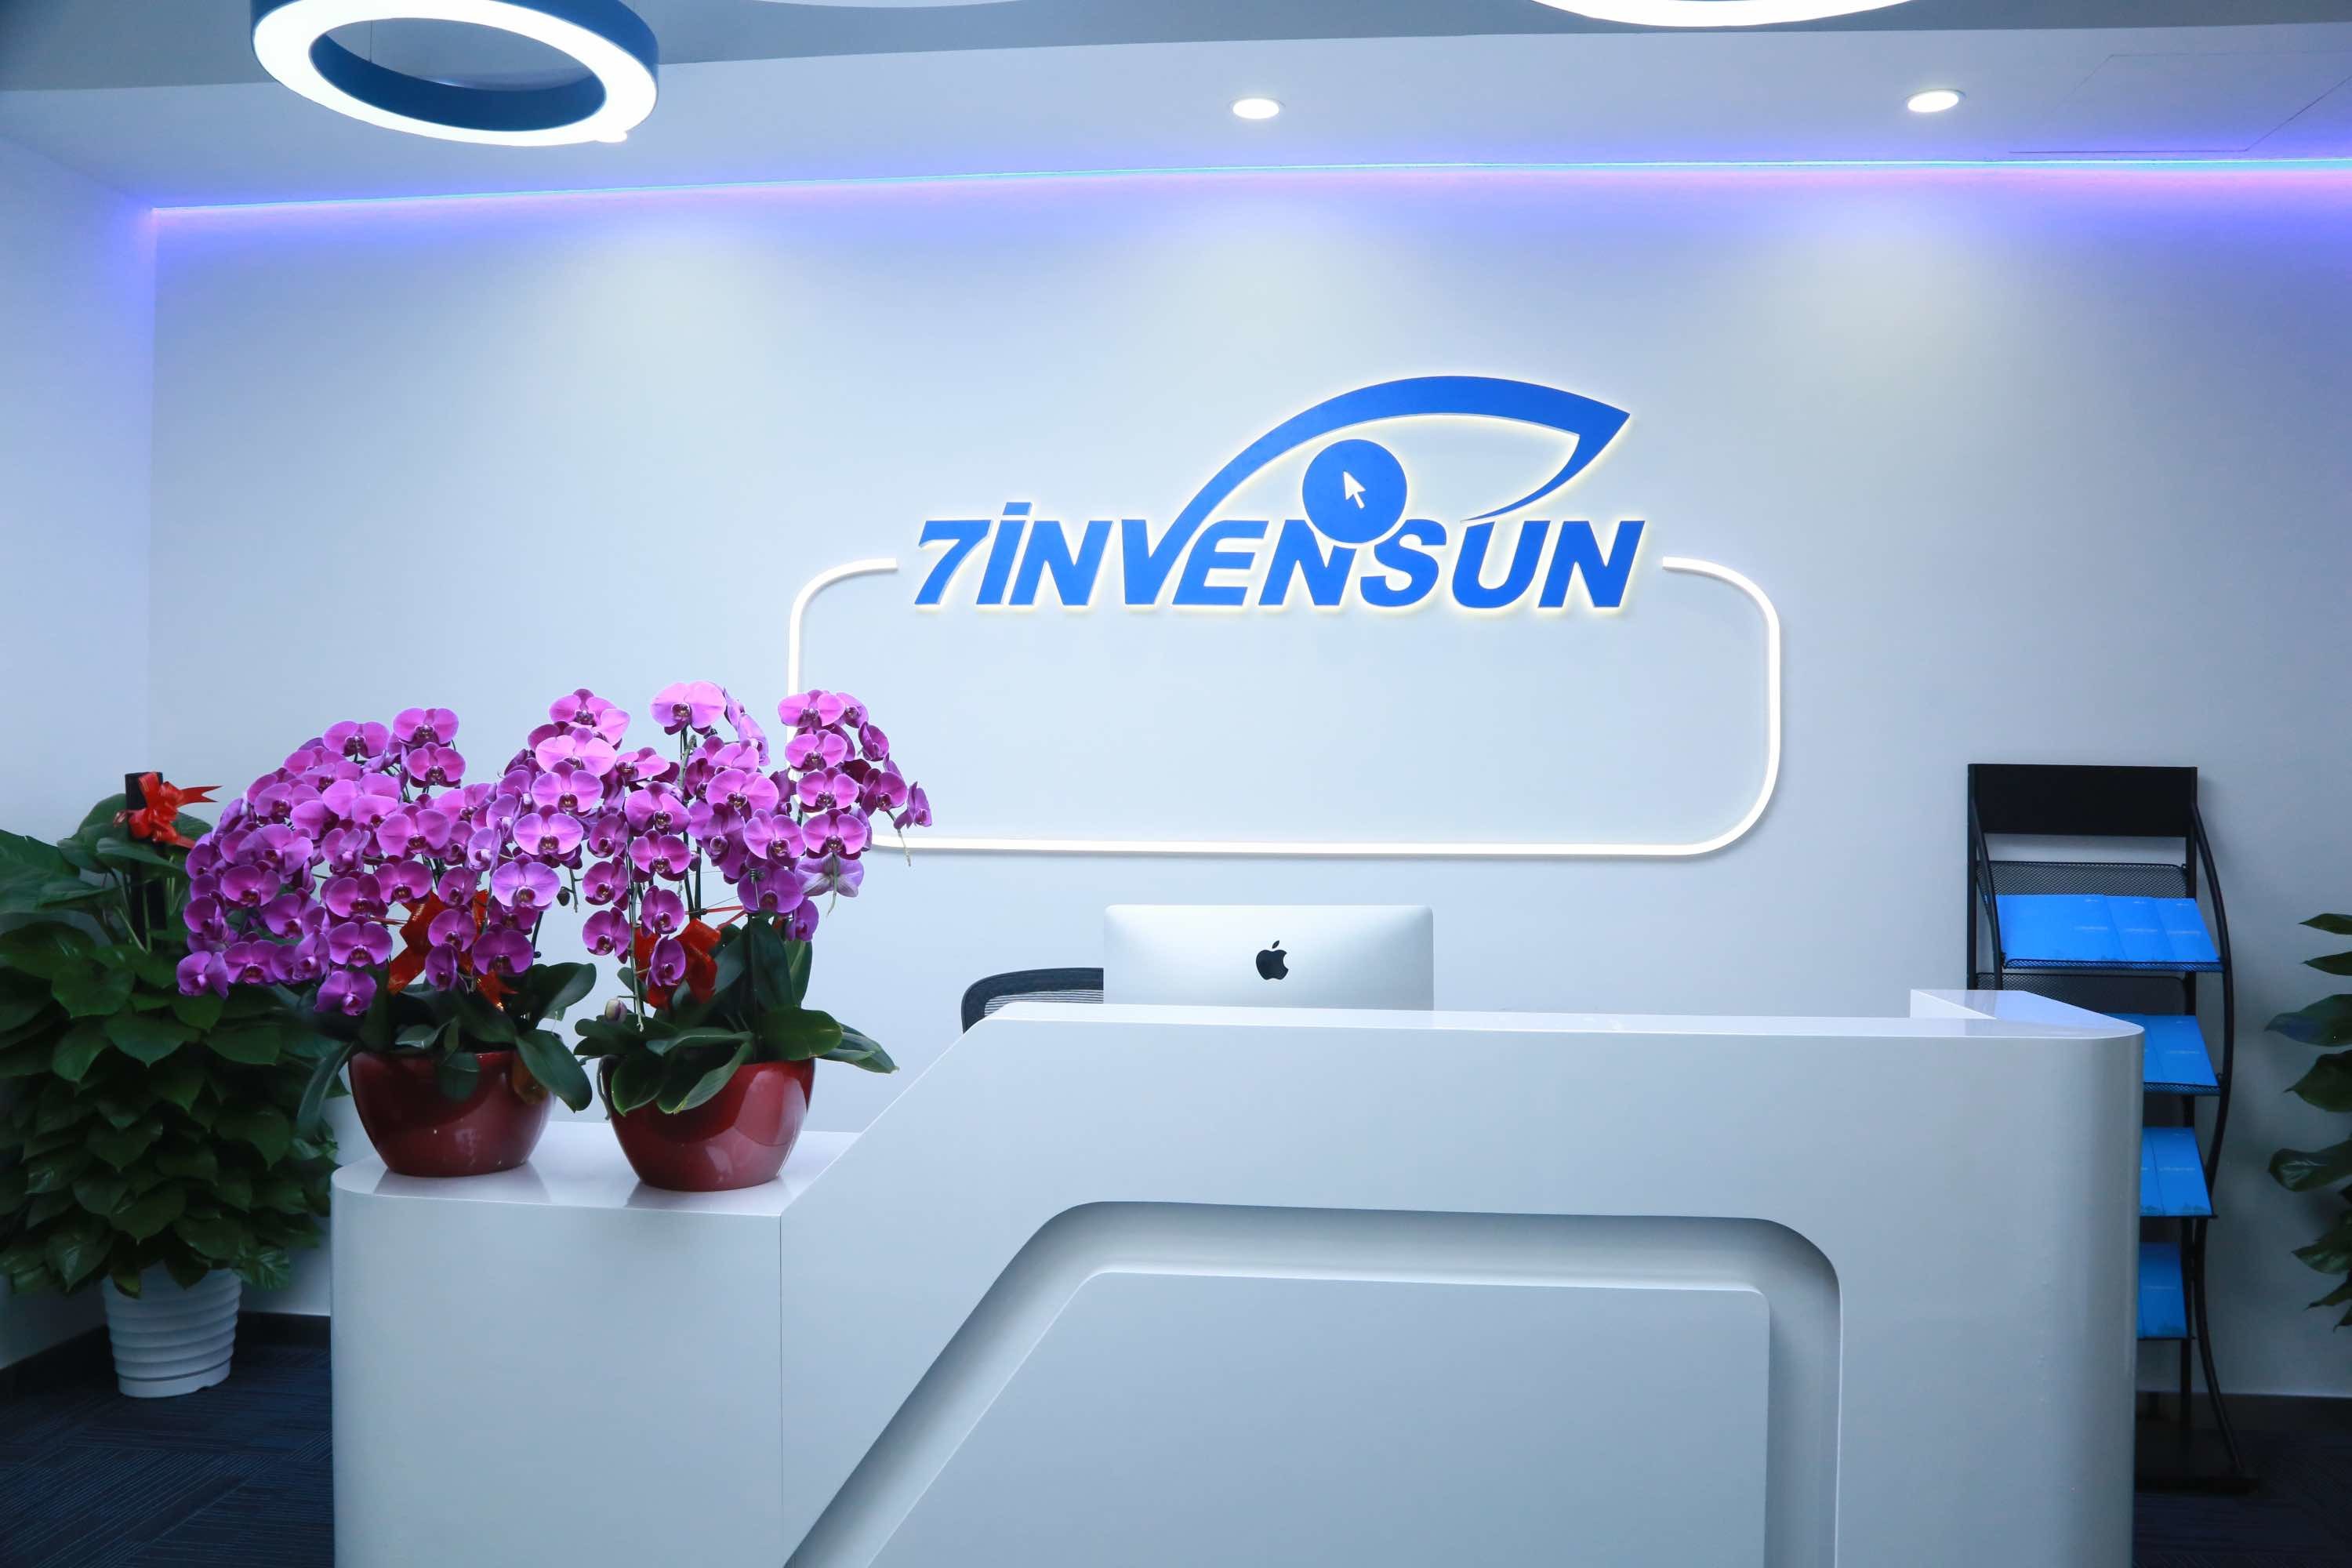 Beijing 7invensun Technology Co., Ltd.